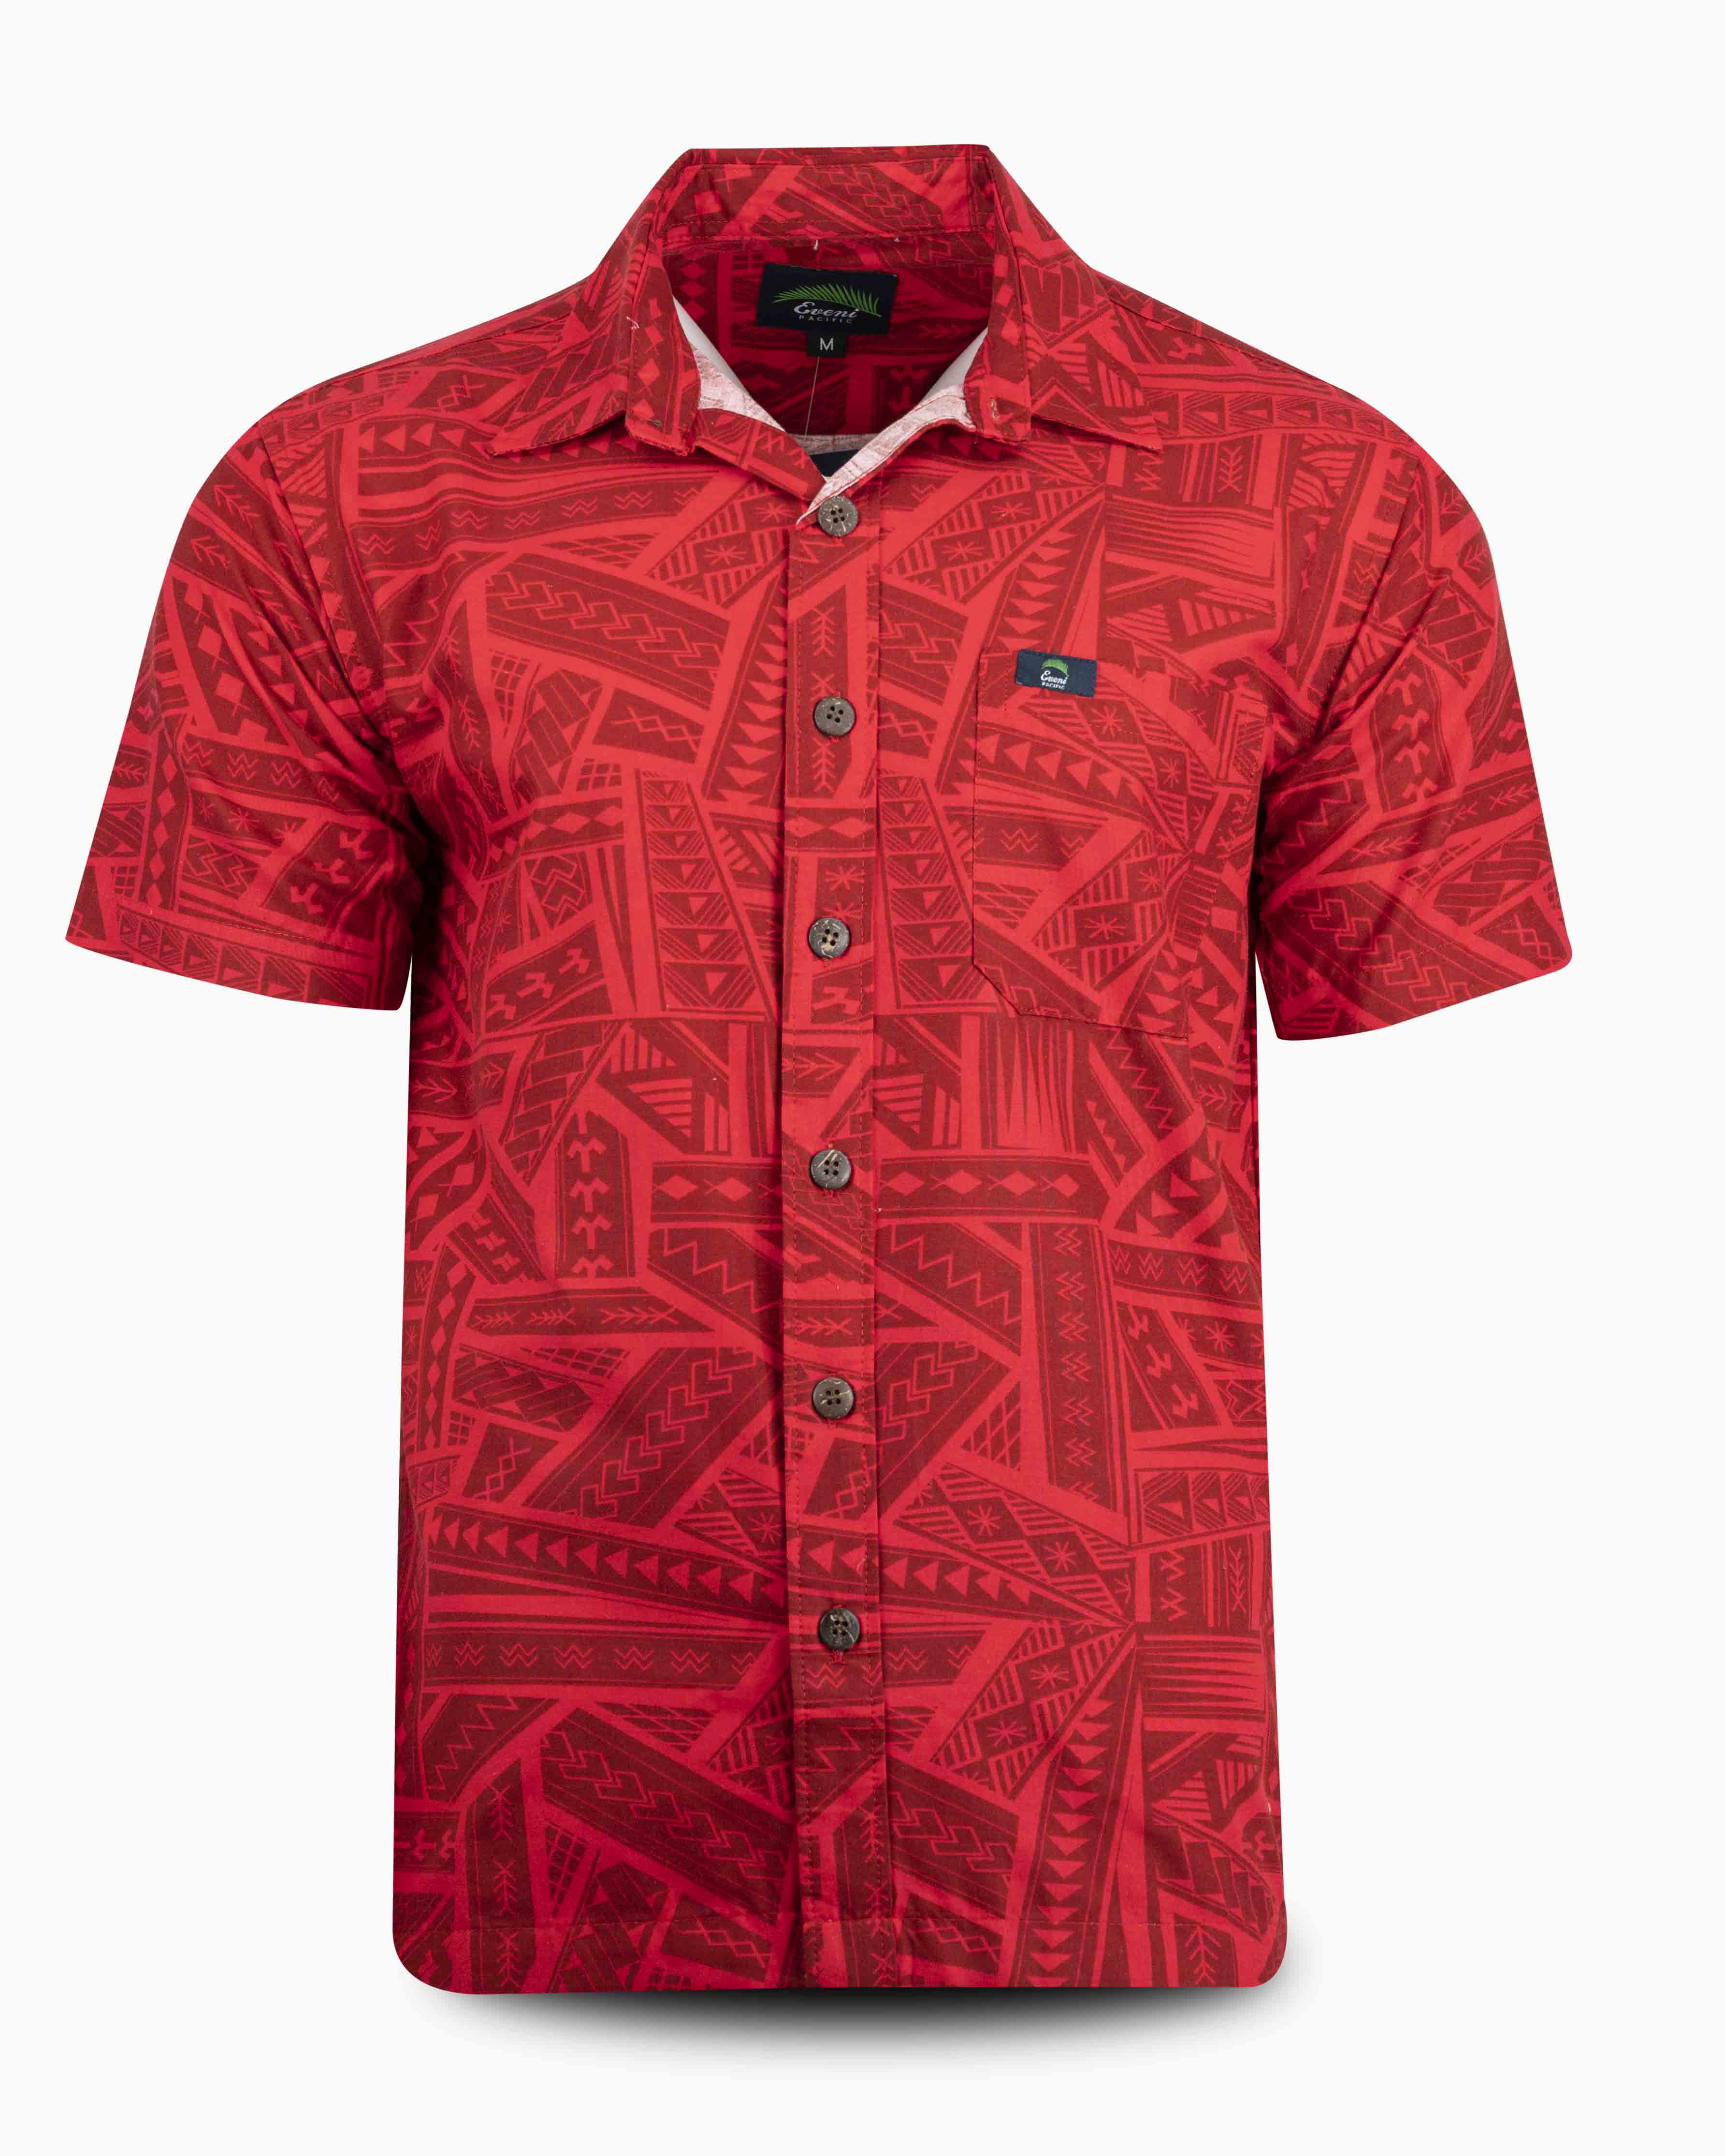 Eveni Pacific Men's Classic Shirt - BULLS RED